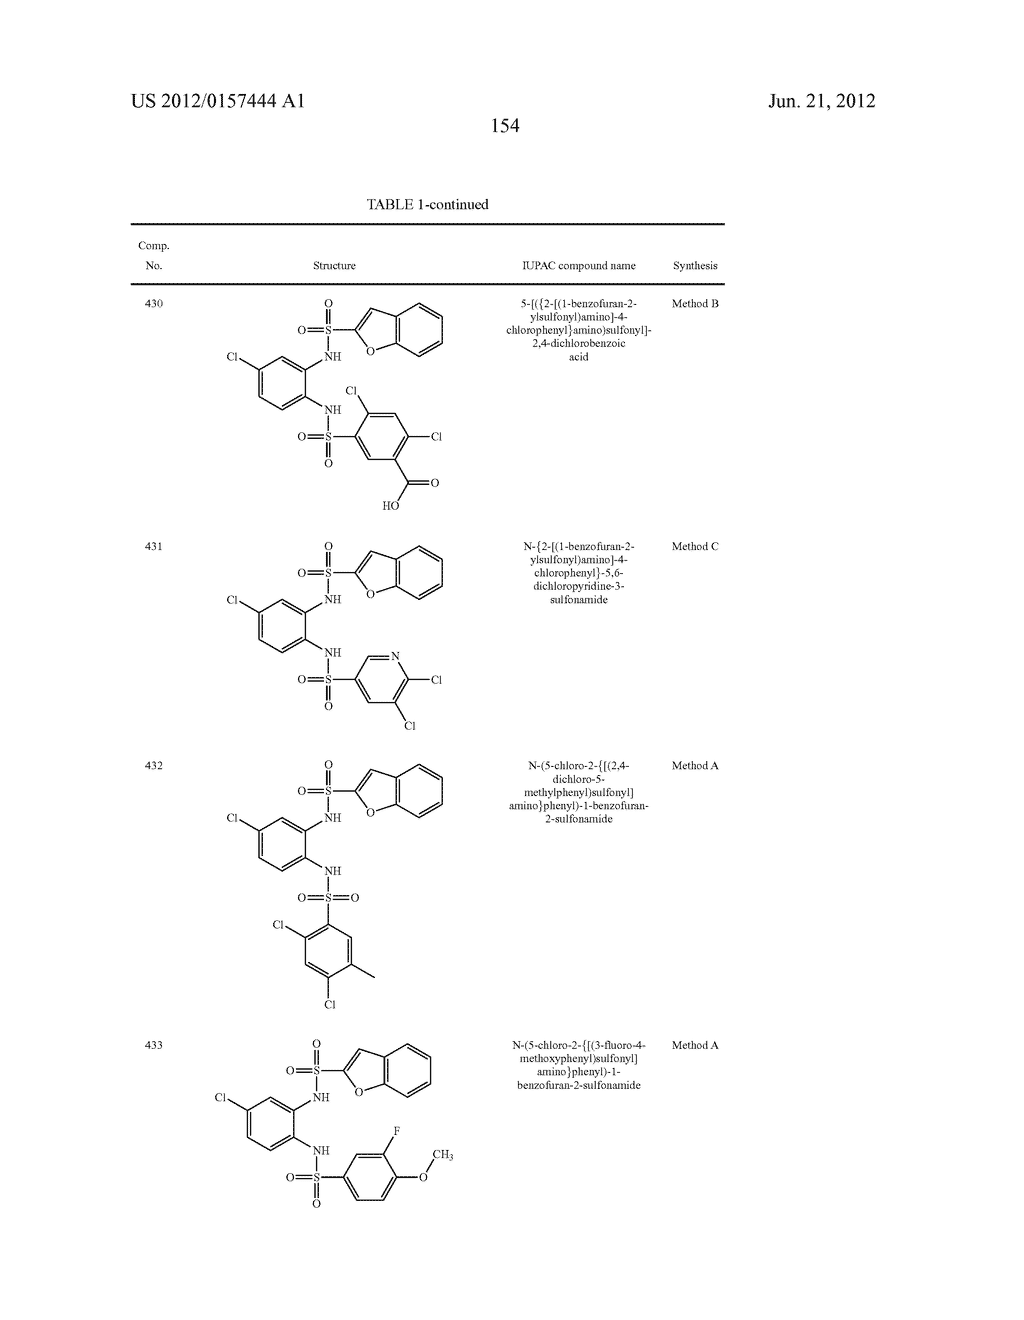 NOVEL 1,2- BIS-SULFONAMIDE DERIVATIVES AS CHEMOKINE RECEPTOR MODULATORS - diagram, schematic, and image 155